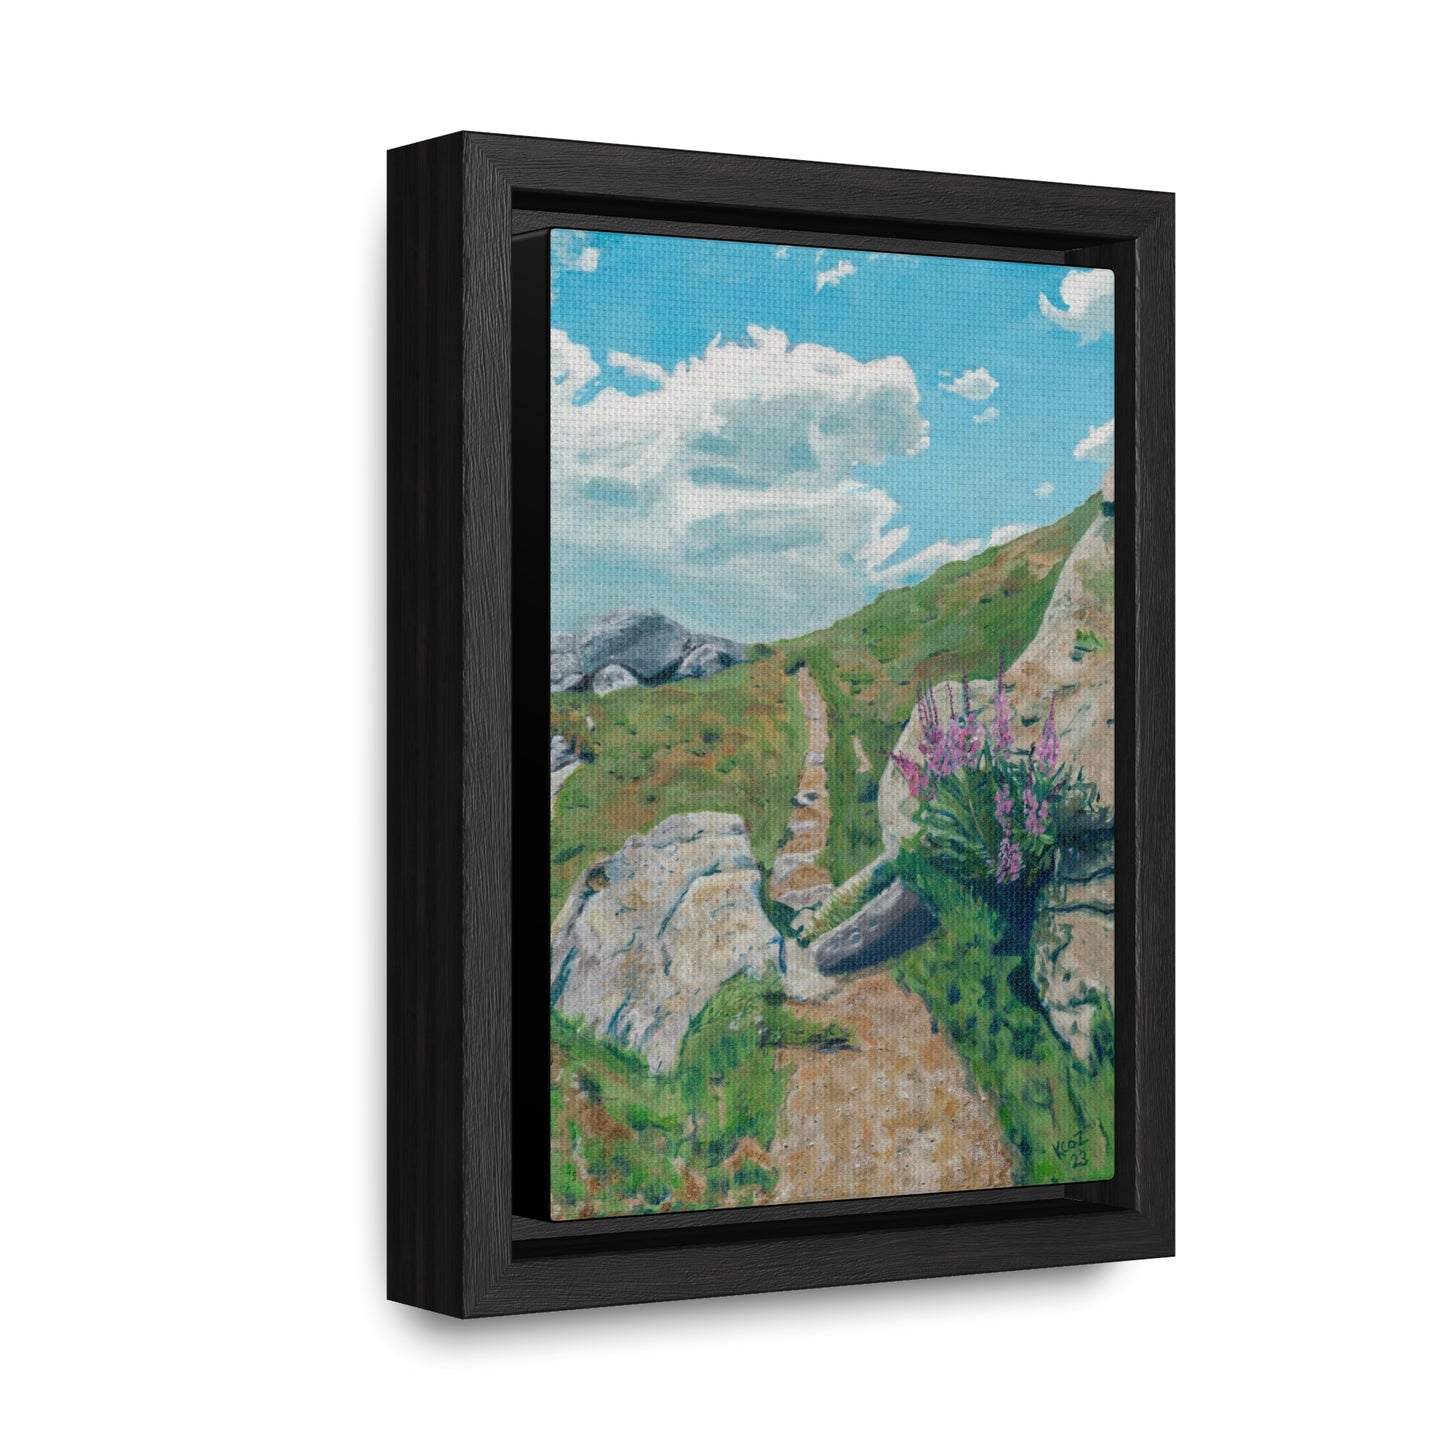 Framed canvas